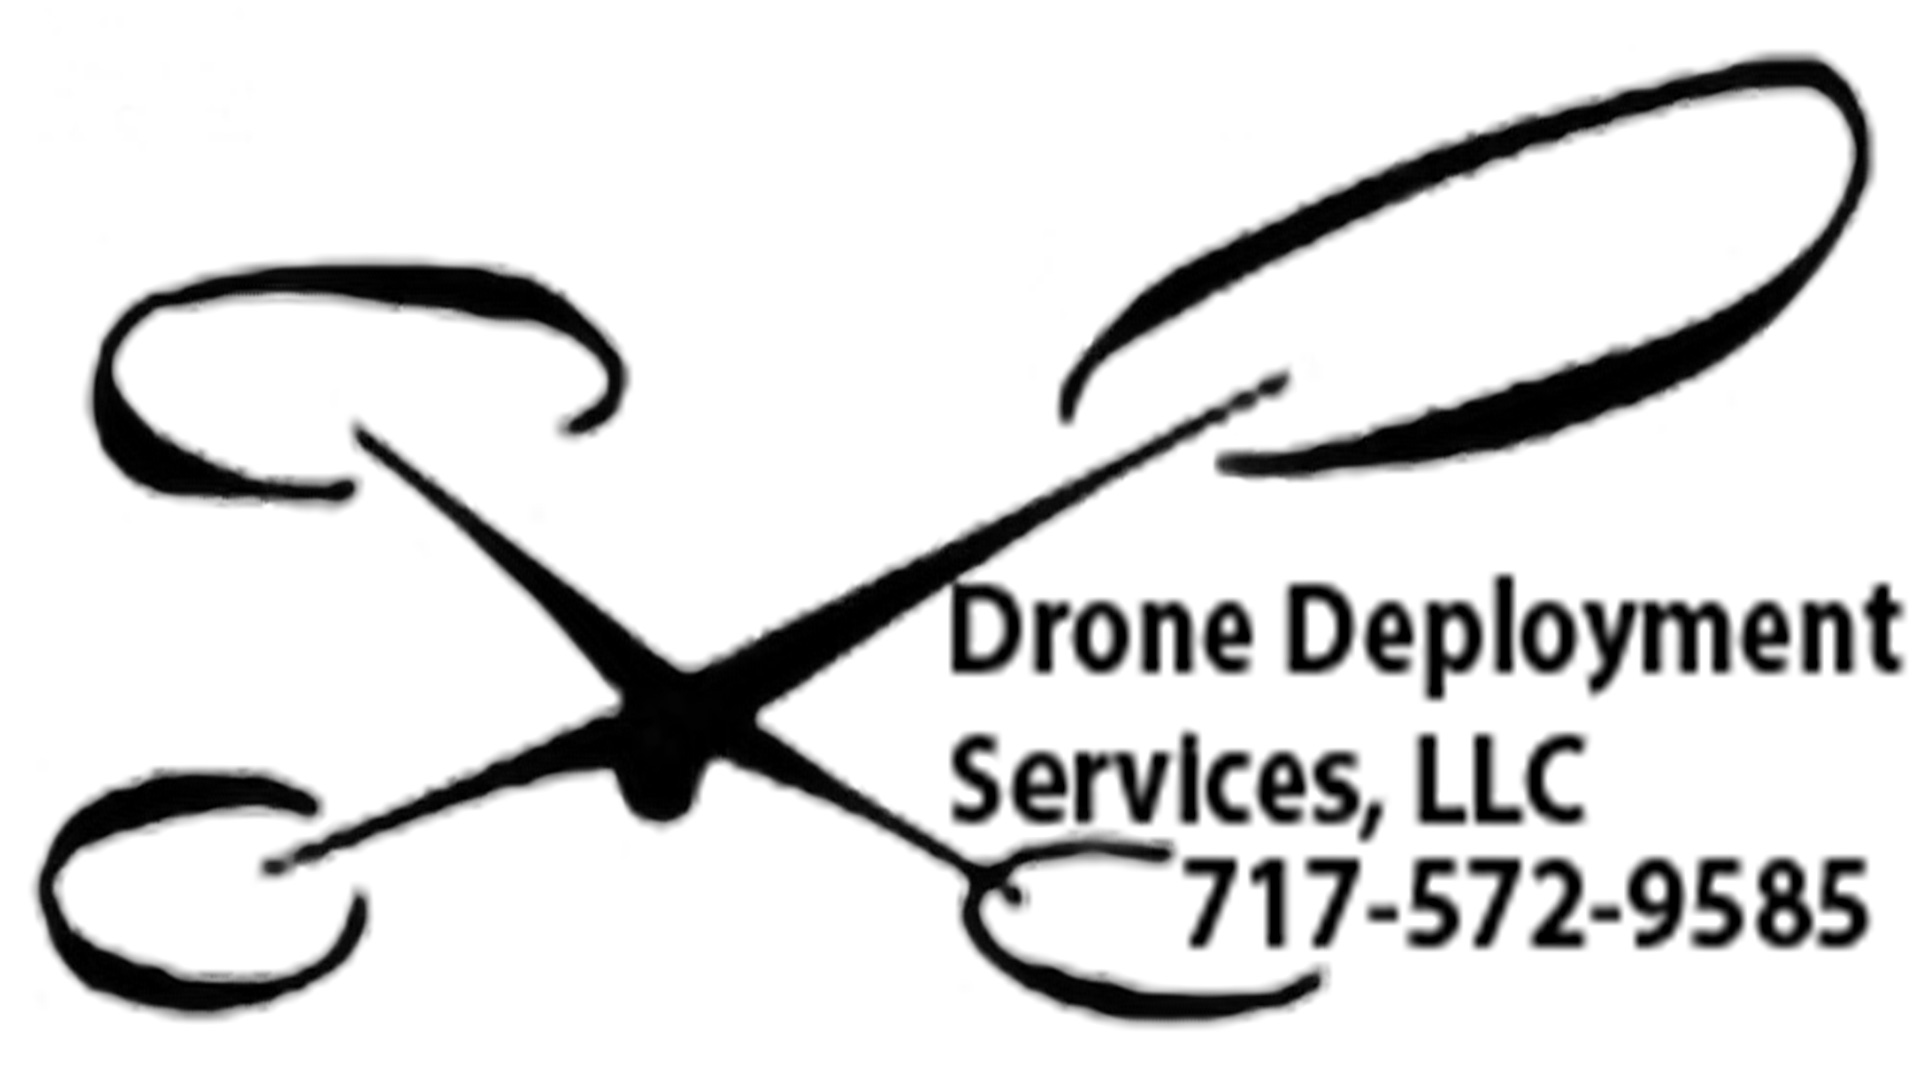 Drone Deployment Services, LLC